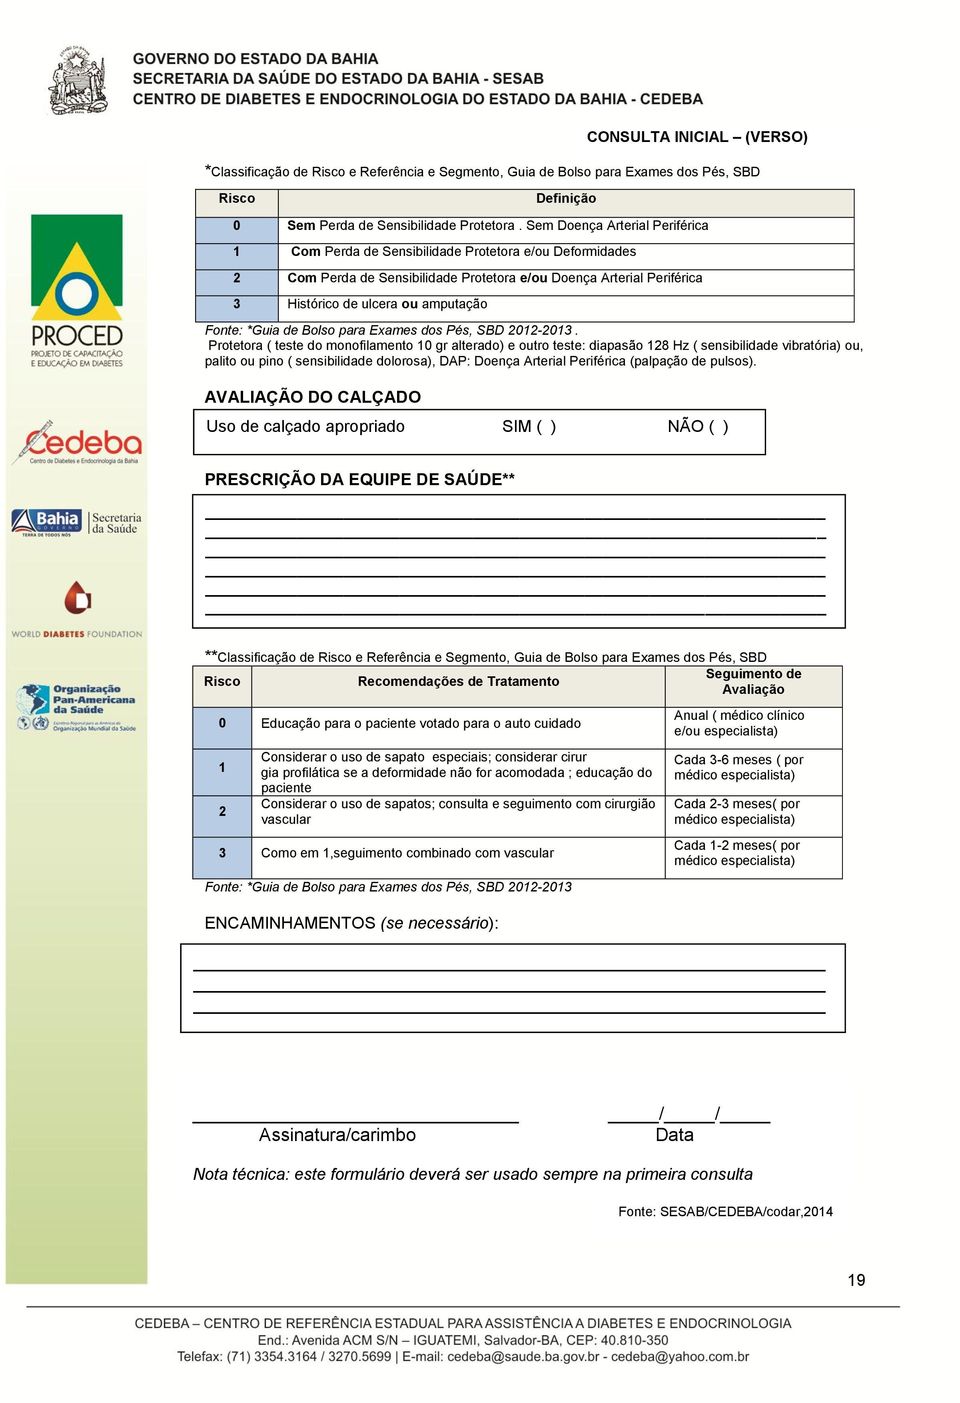 Fonte: *Guia de Bolso para Exames dos Pés, SBD 2012-2013.